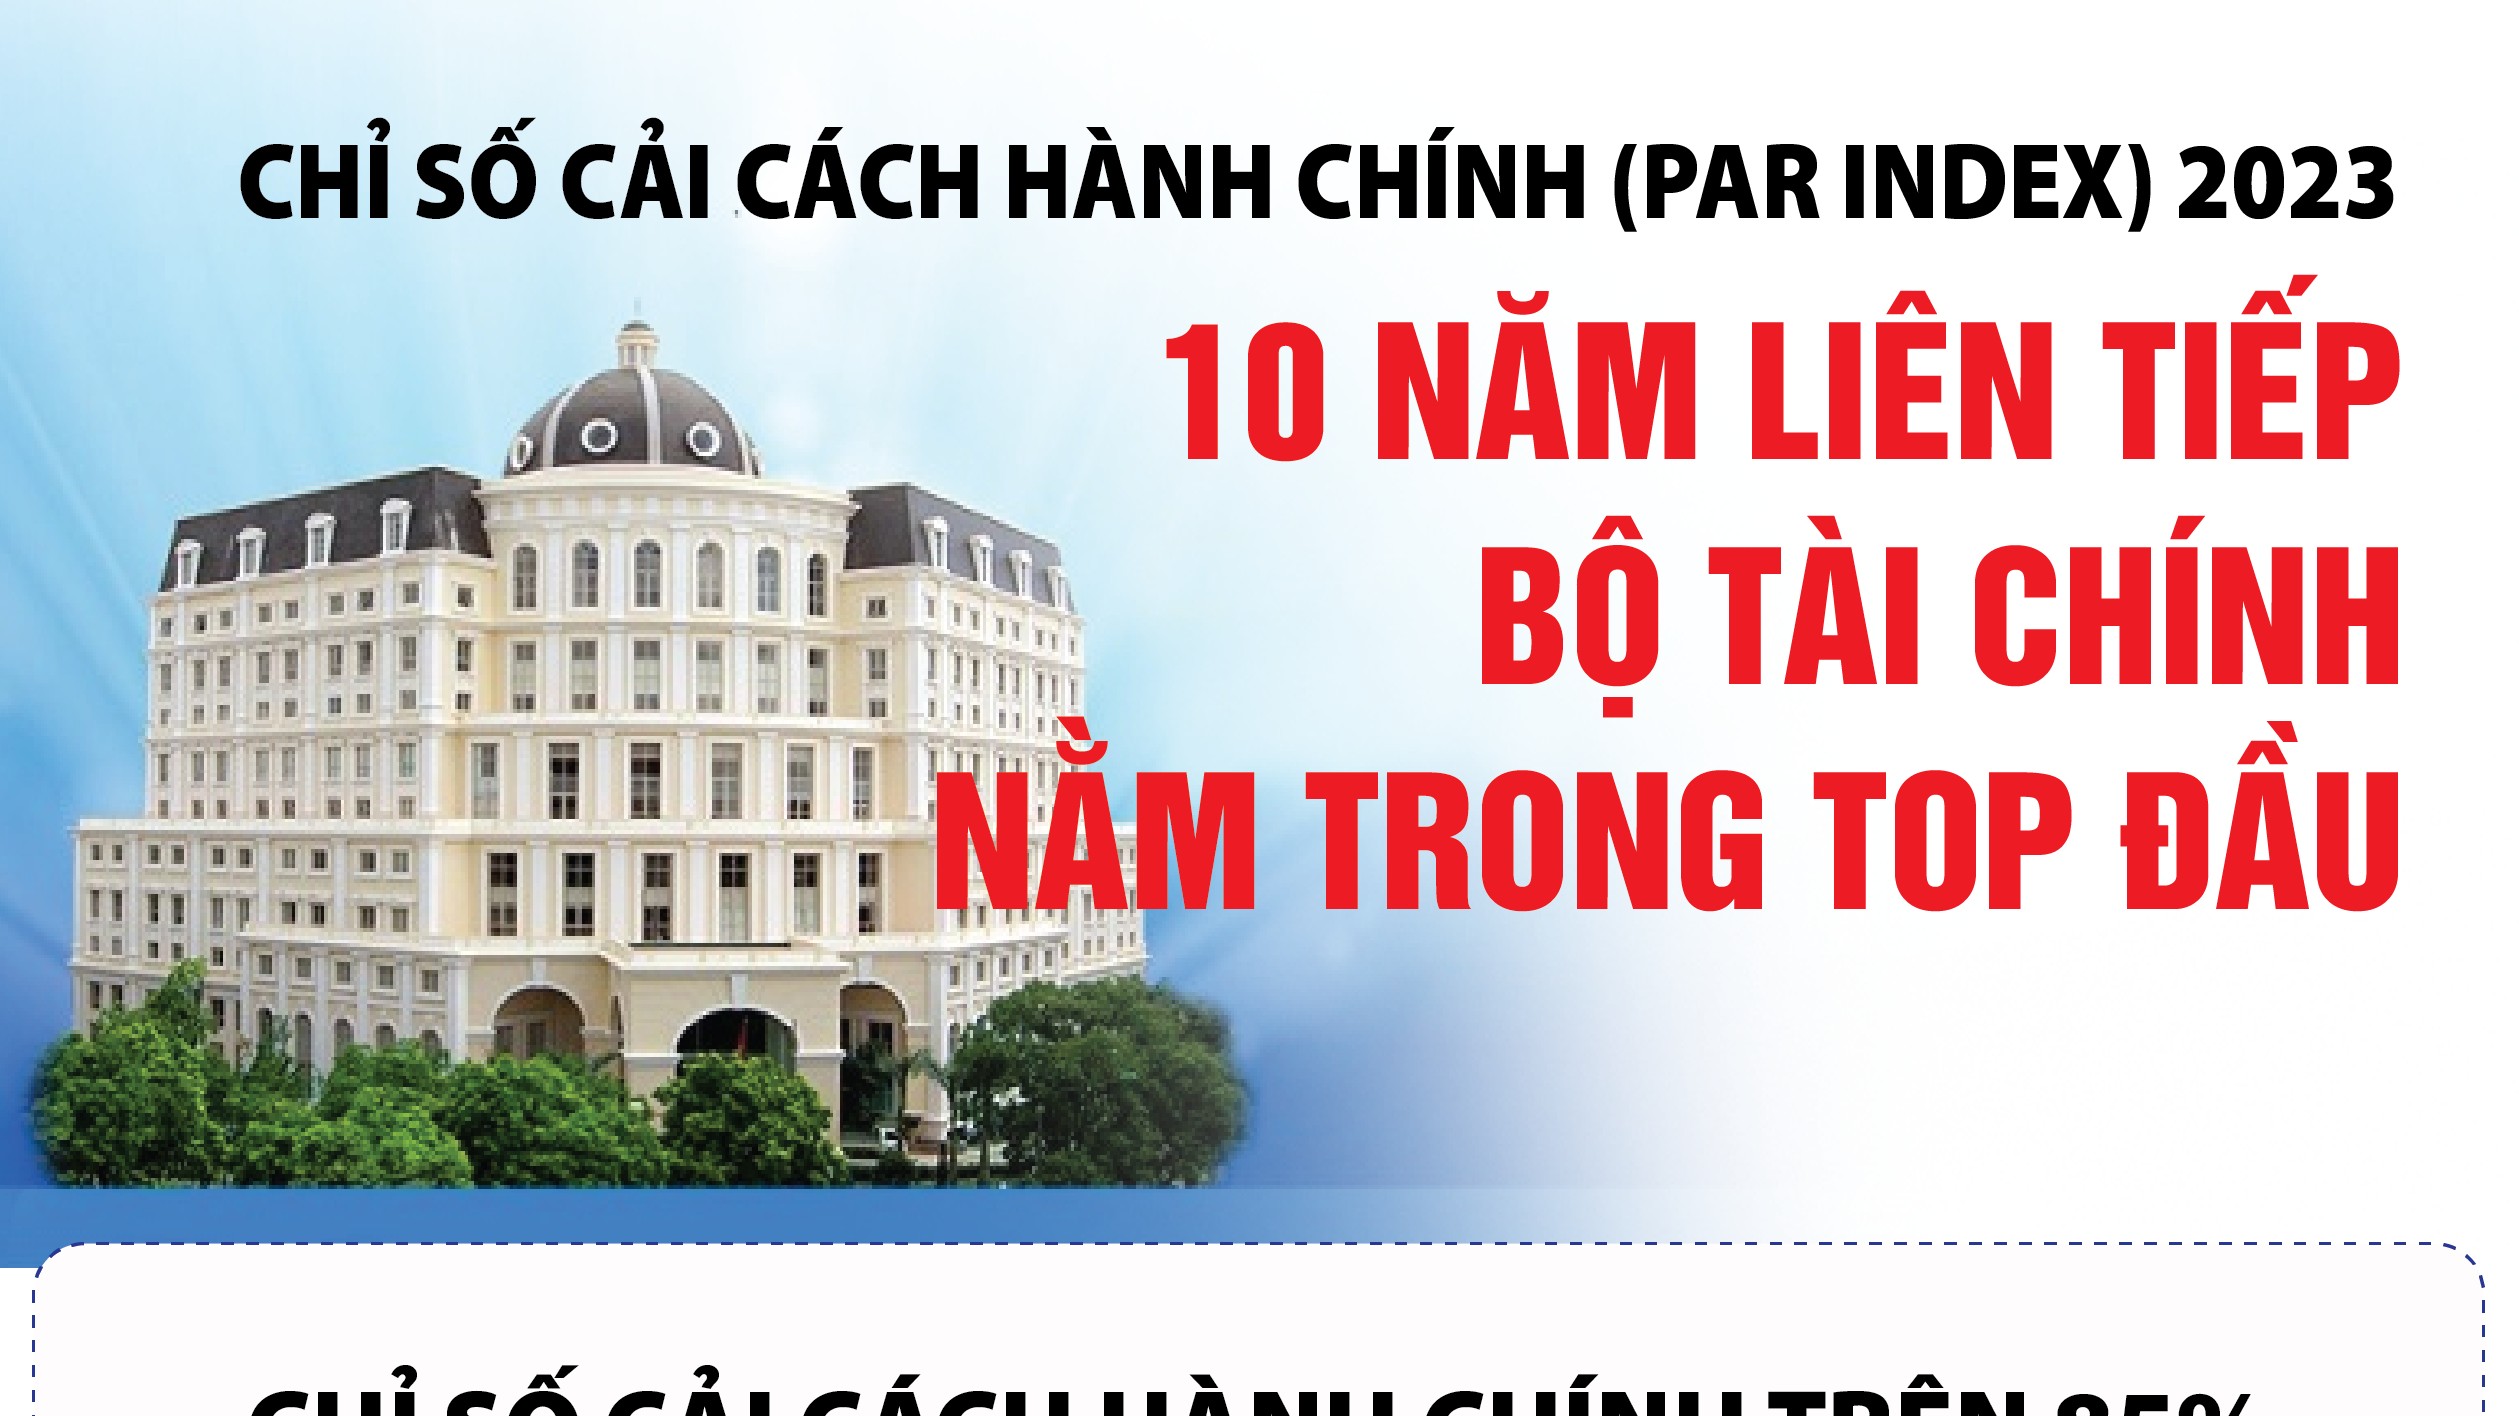 infographics bo tai chinh nam trong top dau ve chi so cai cach hanh chinh